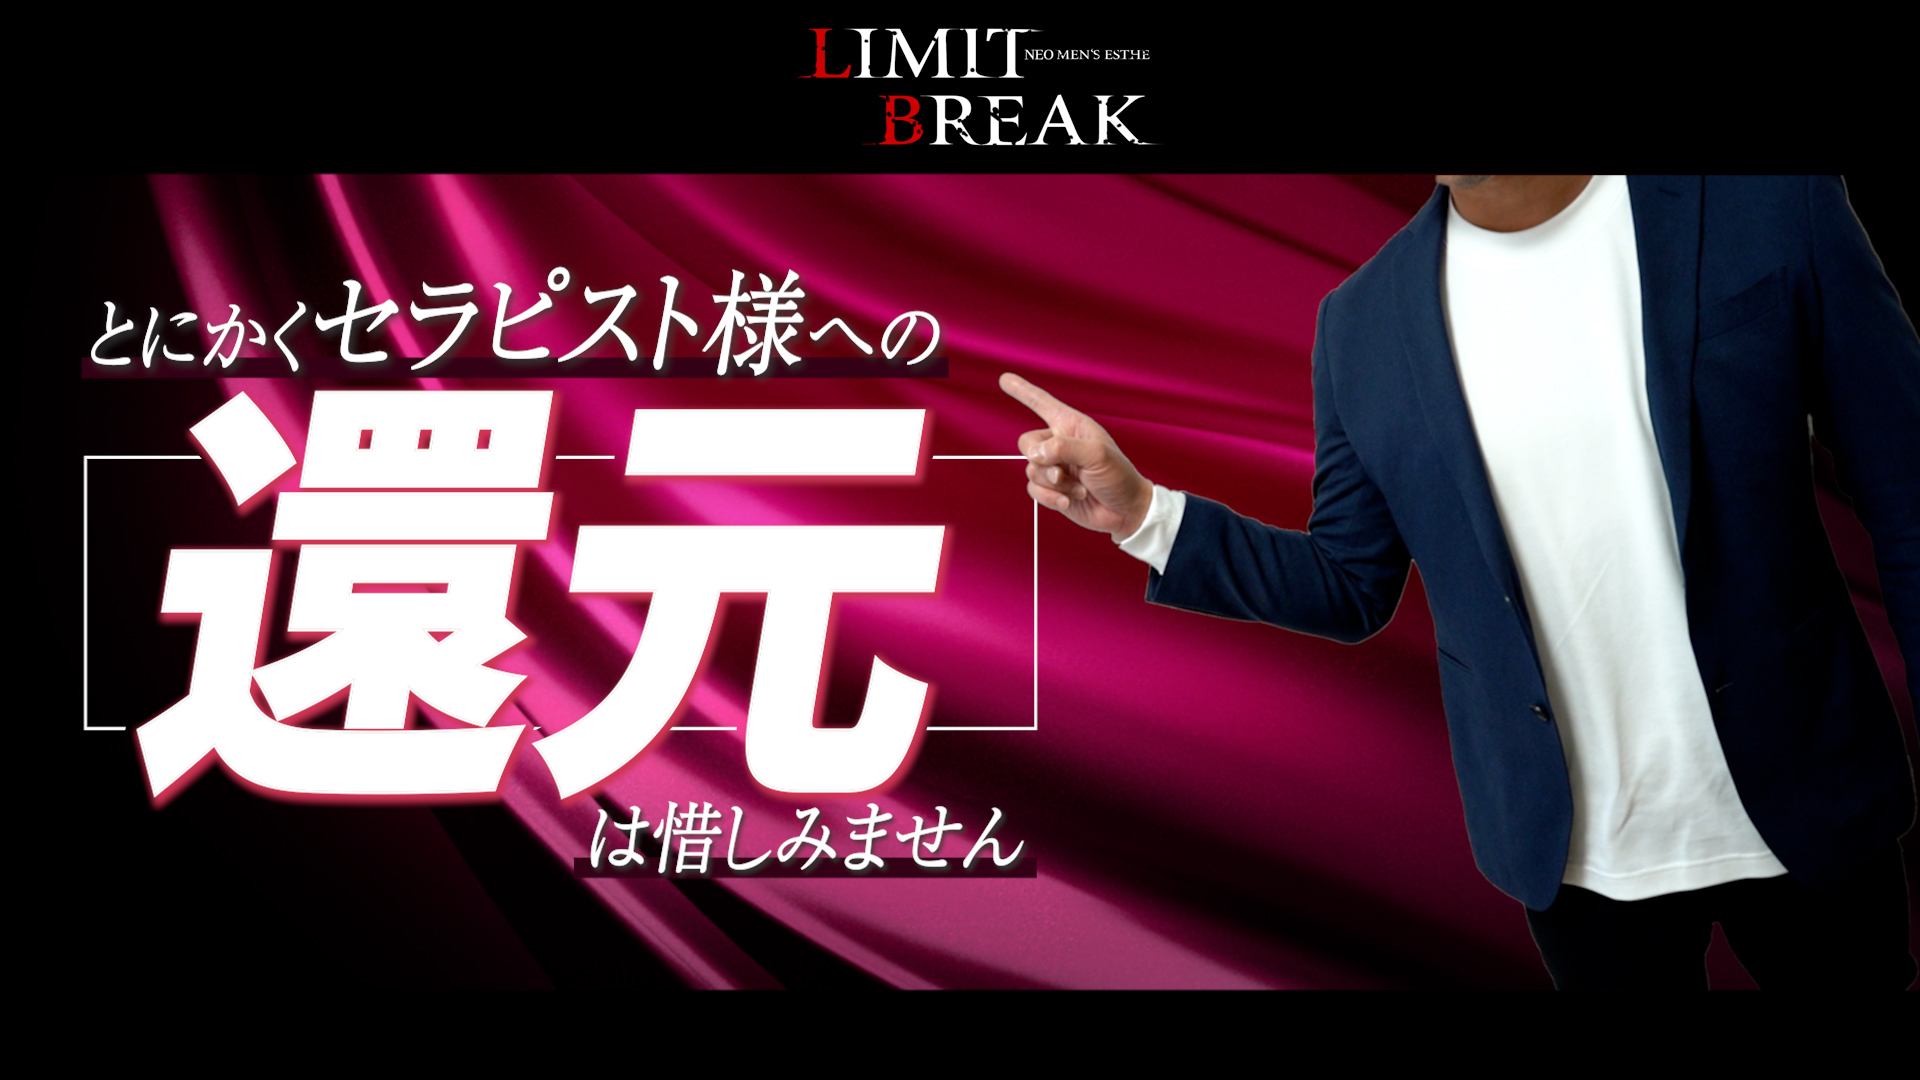 LIMIT BREAK 錦糸町のスタッフによるお仕事紹介動画